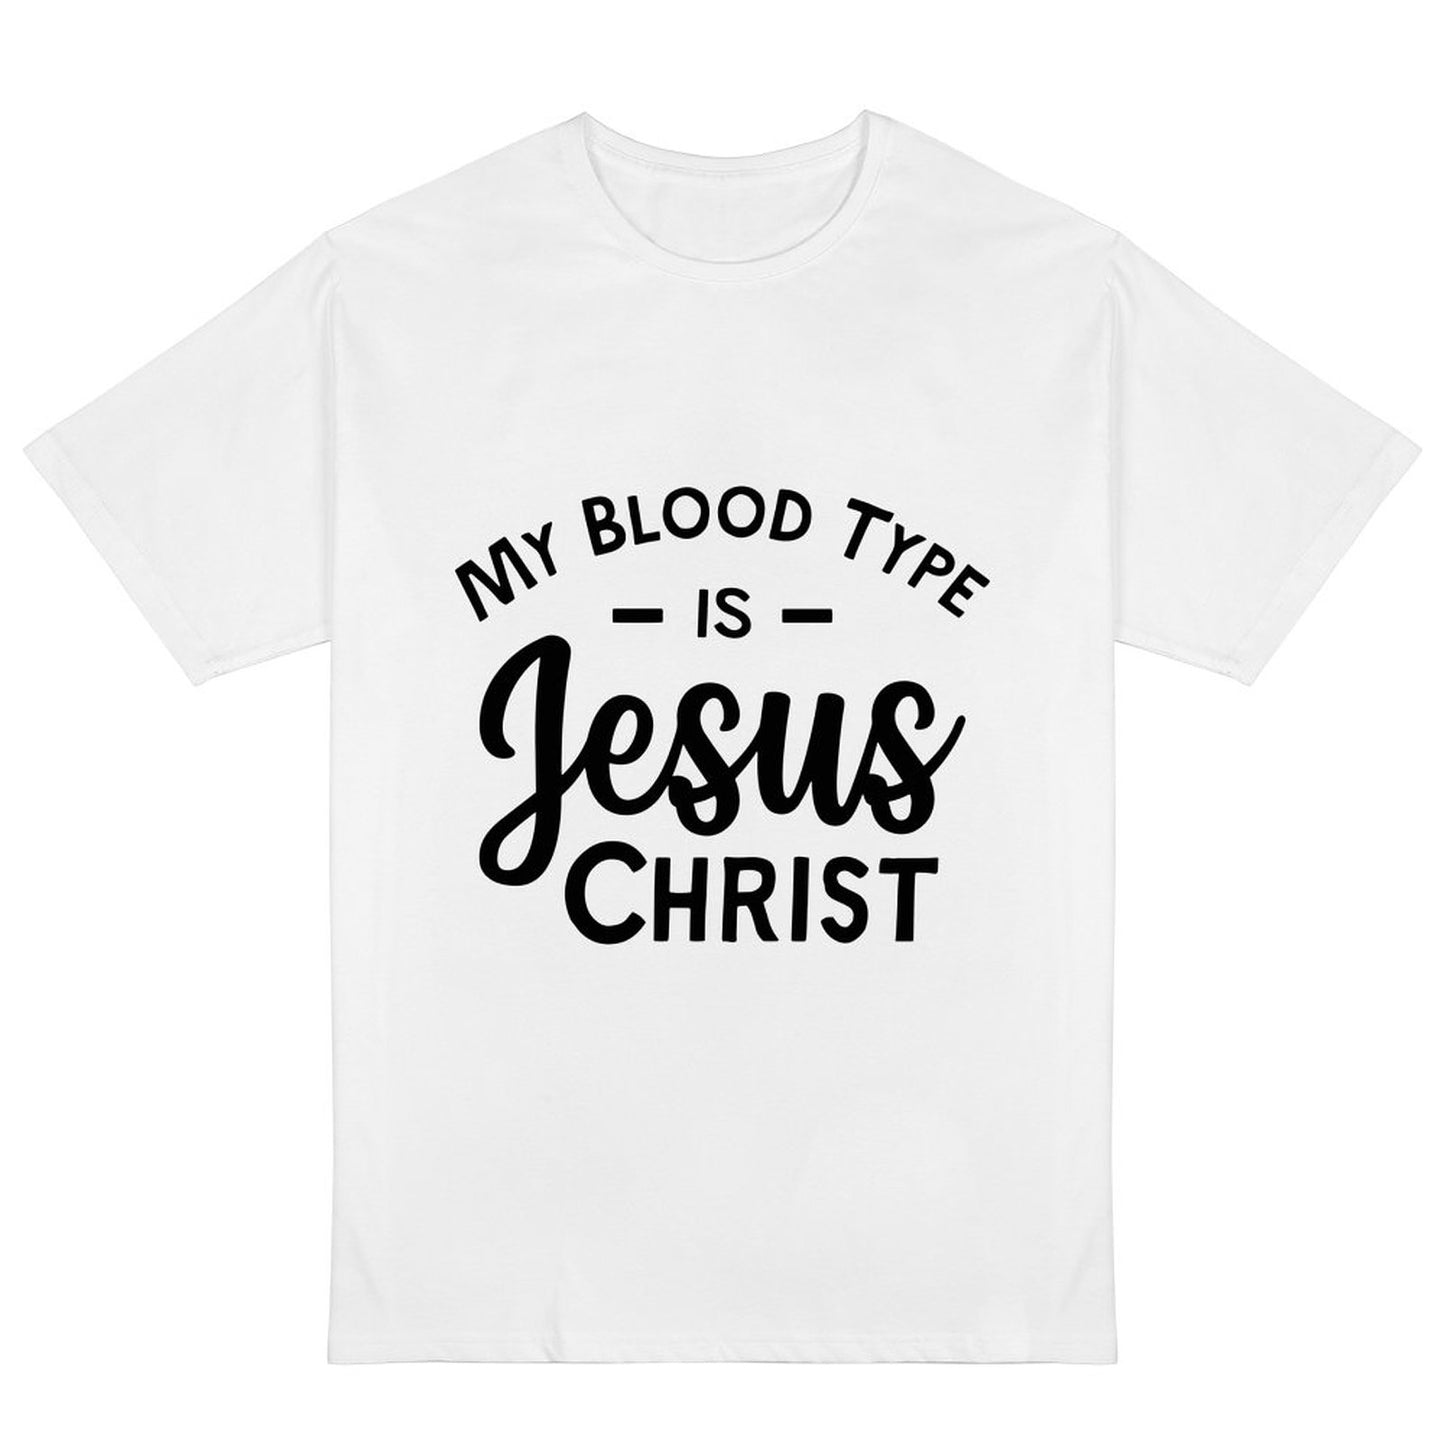 My Blood Type Is Jesus Christ Women's Christian T-shirt SALE-Personal Design